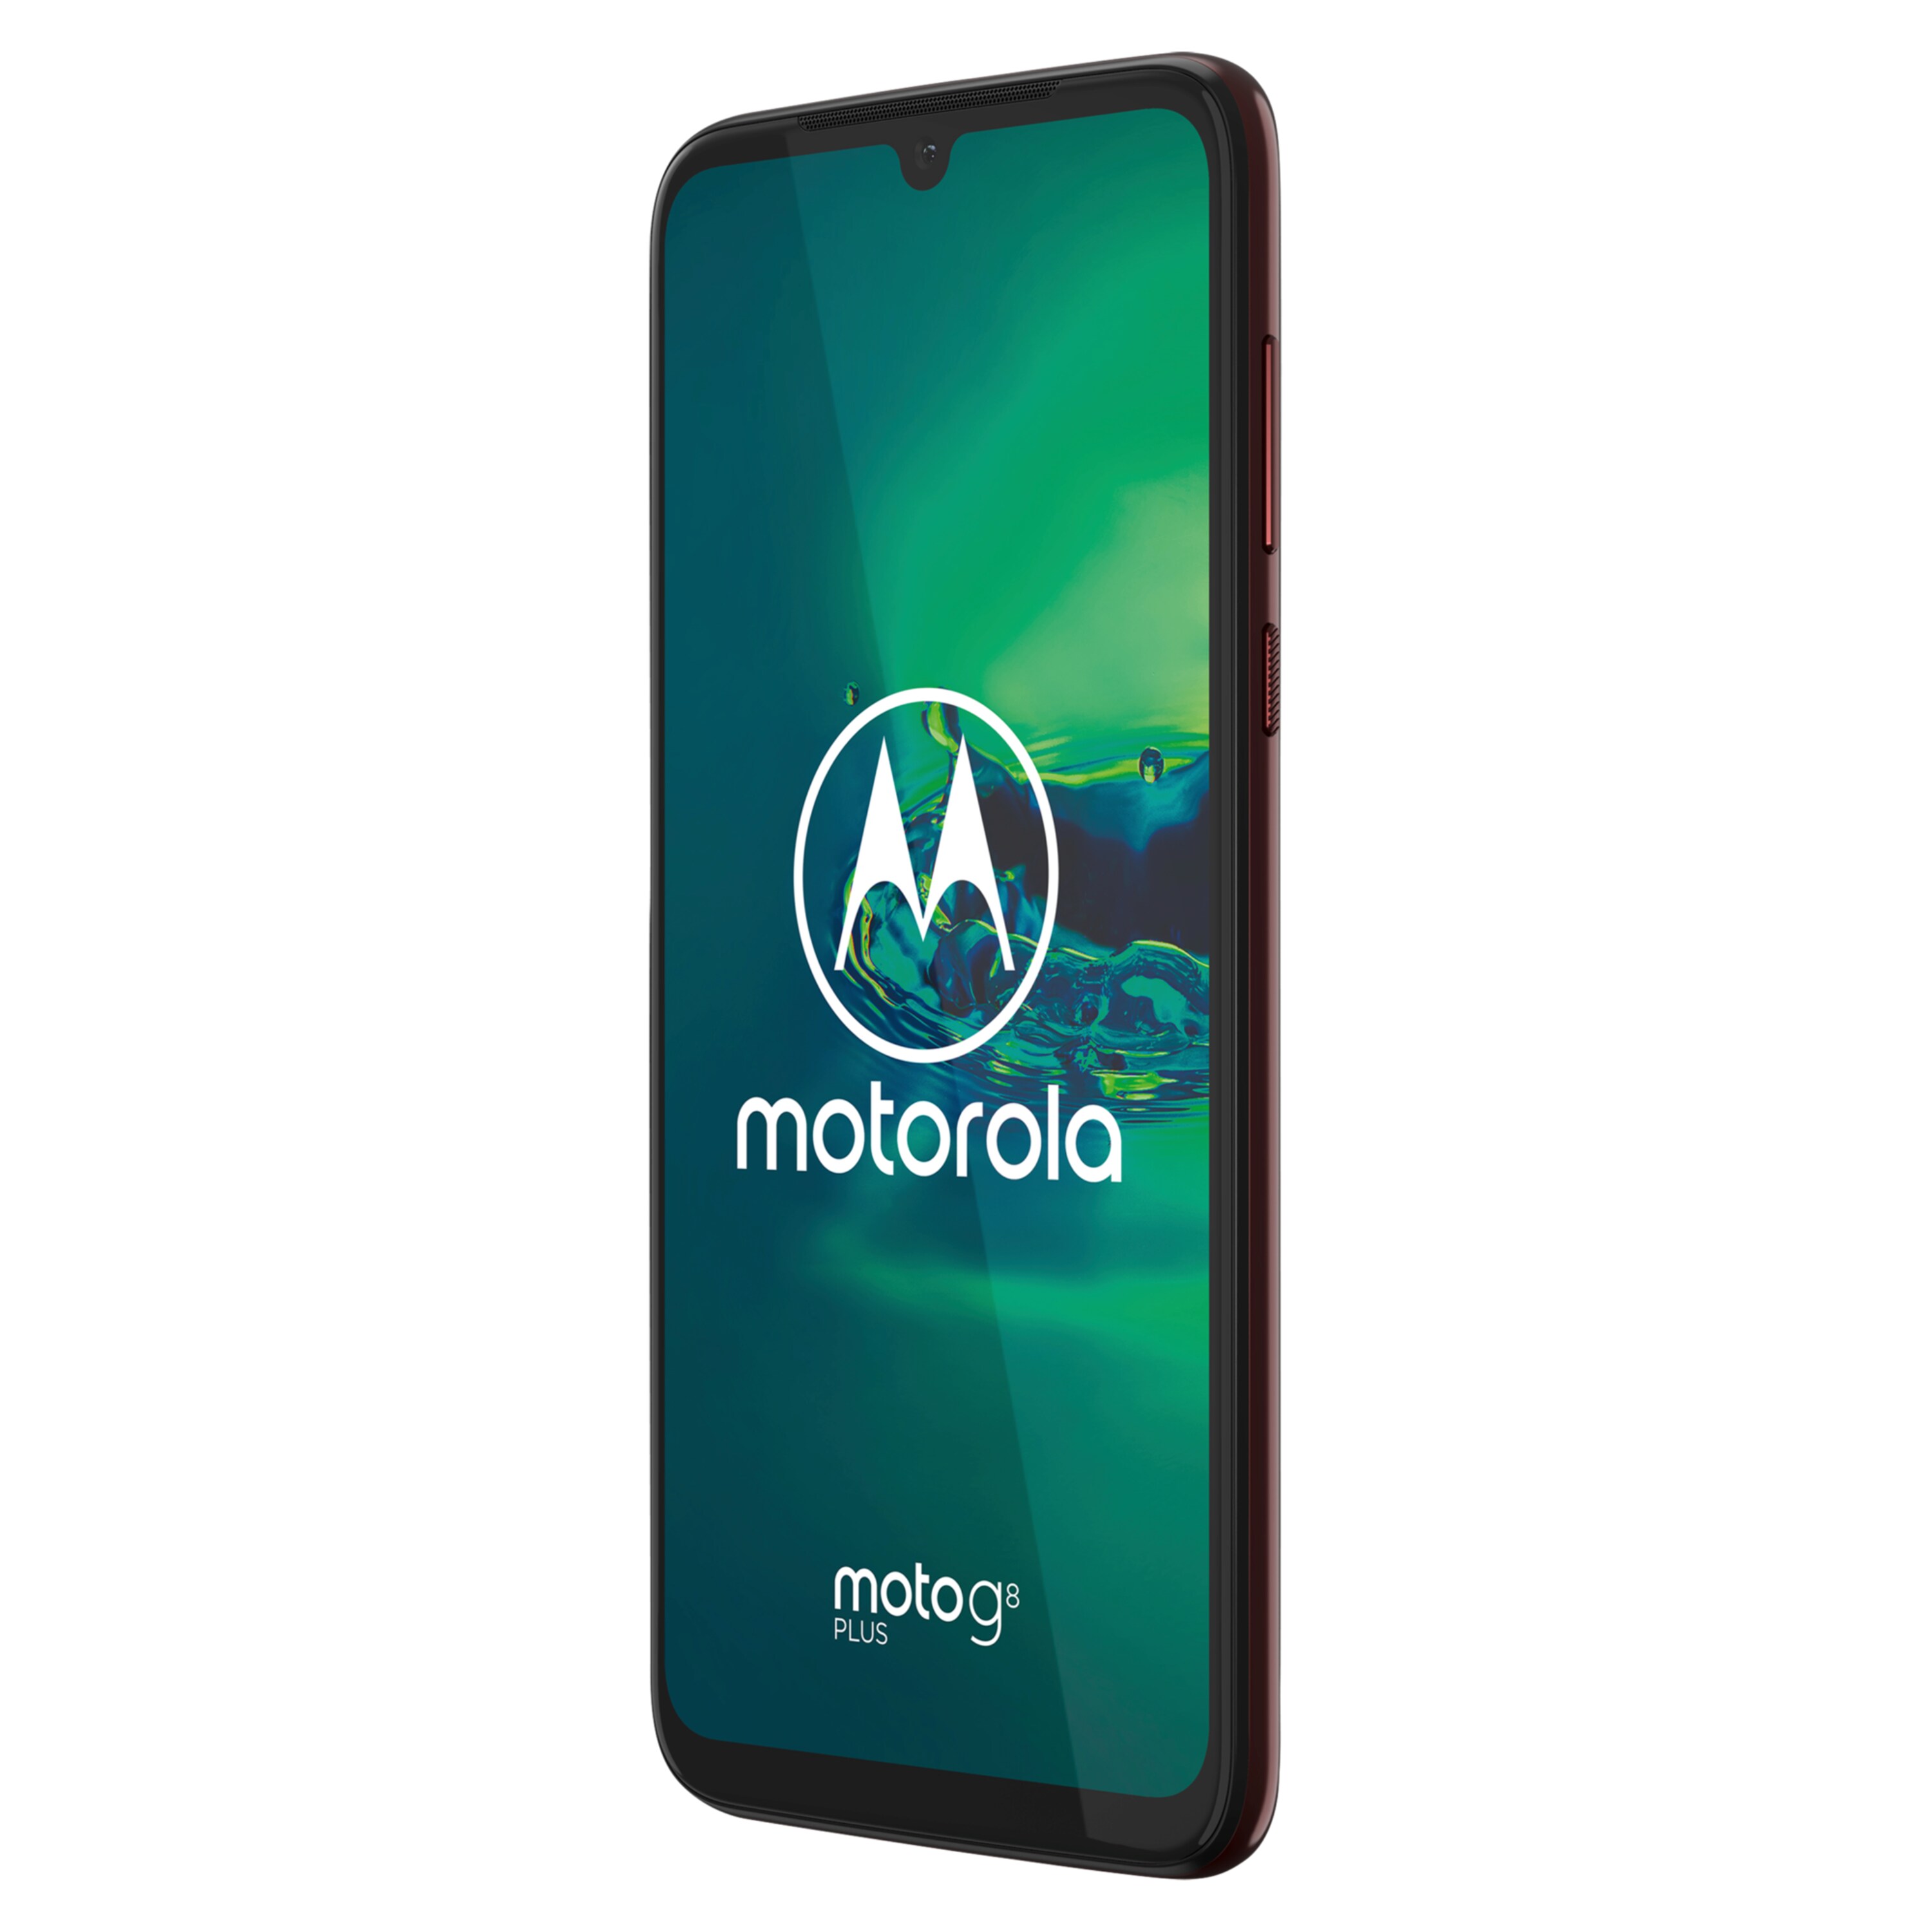 MOTOROLA moto g8 plus Smartphone, 16 cm (6,3'') Full HD+ Display, Android™ 9, 64 GB Speicher, 4GB RAM, Octa-Core-Prozessor, Dual-SIM, LTE